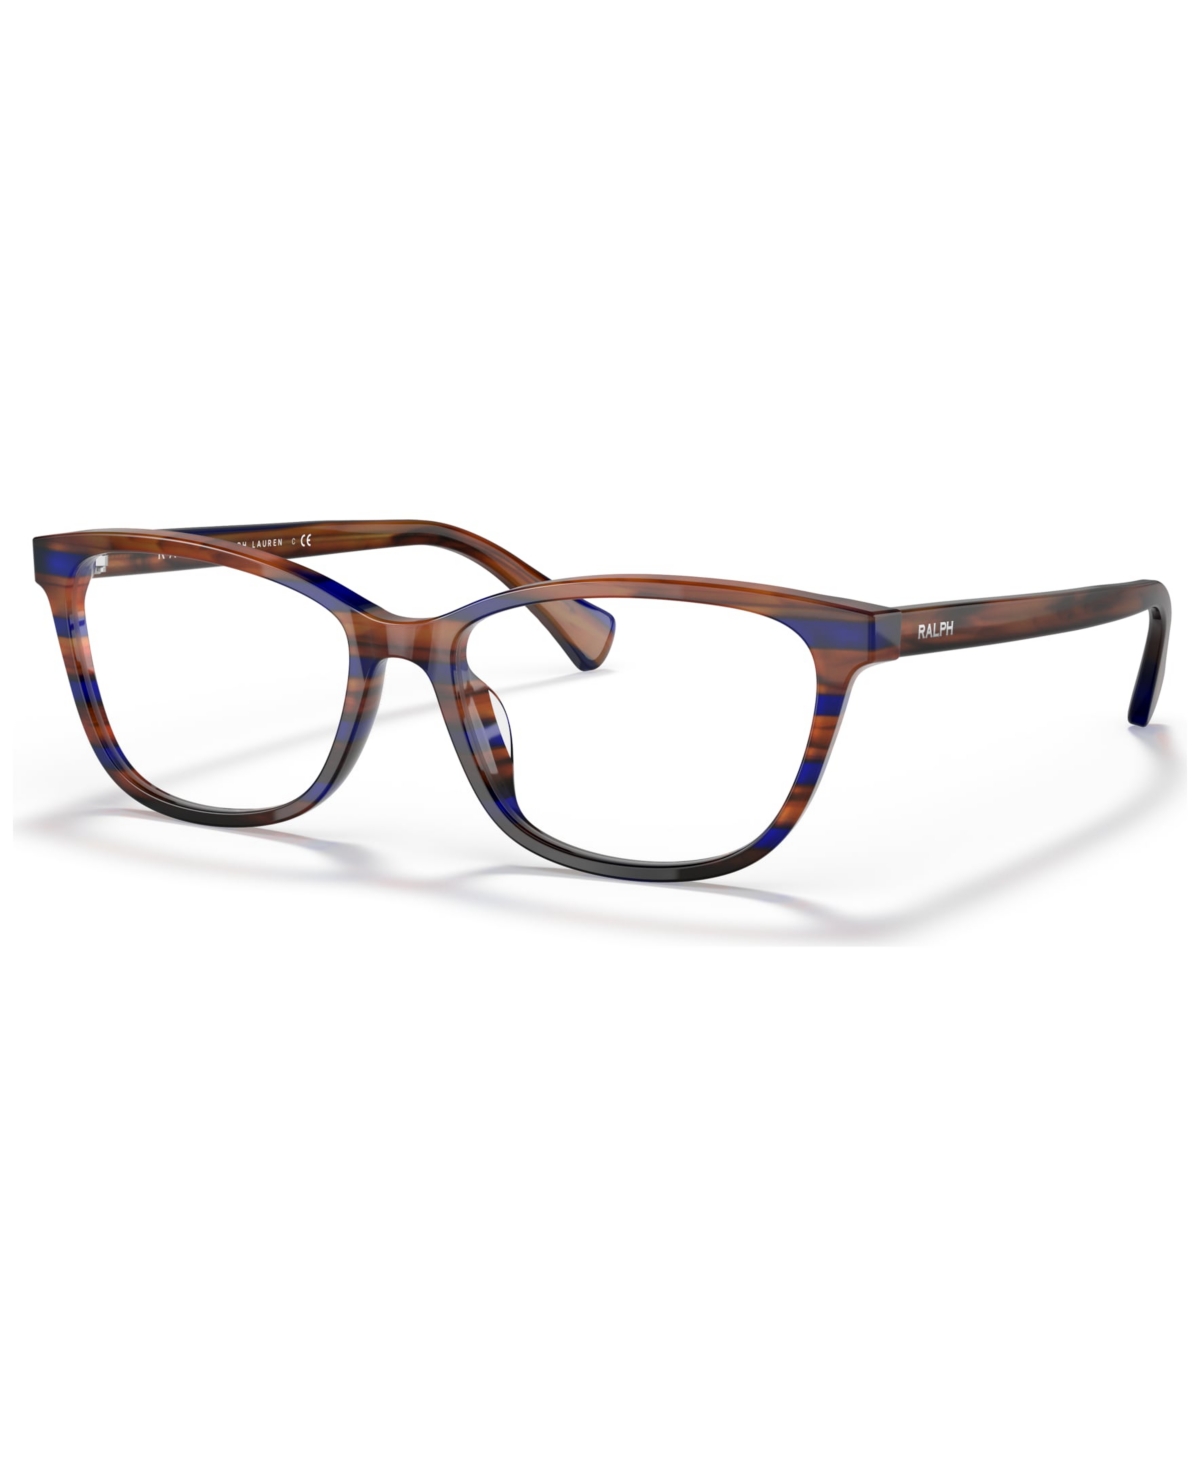 Women's Eyeglasses, RA7133U - Striped Brown Blue